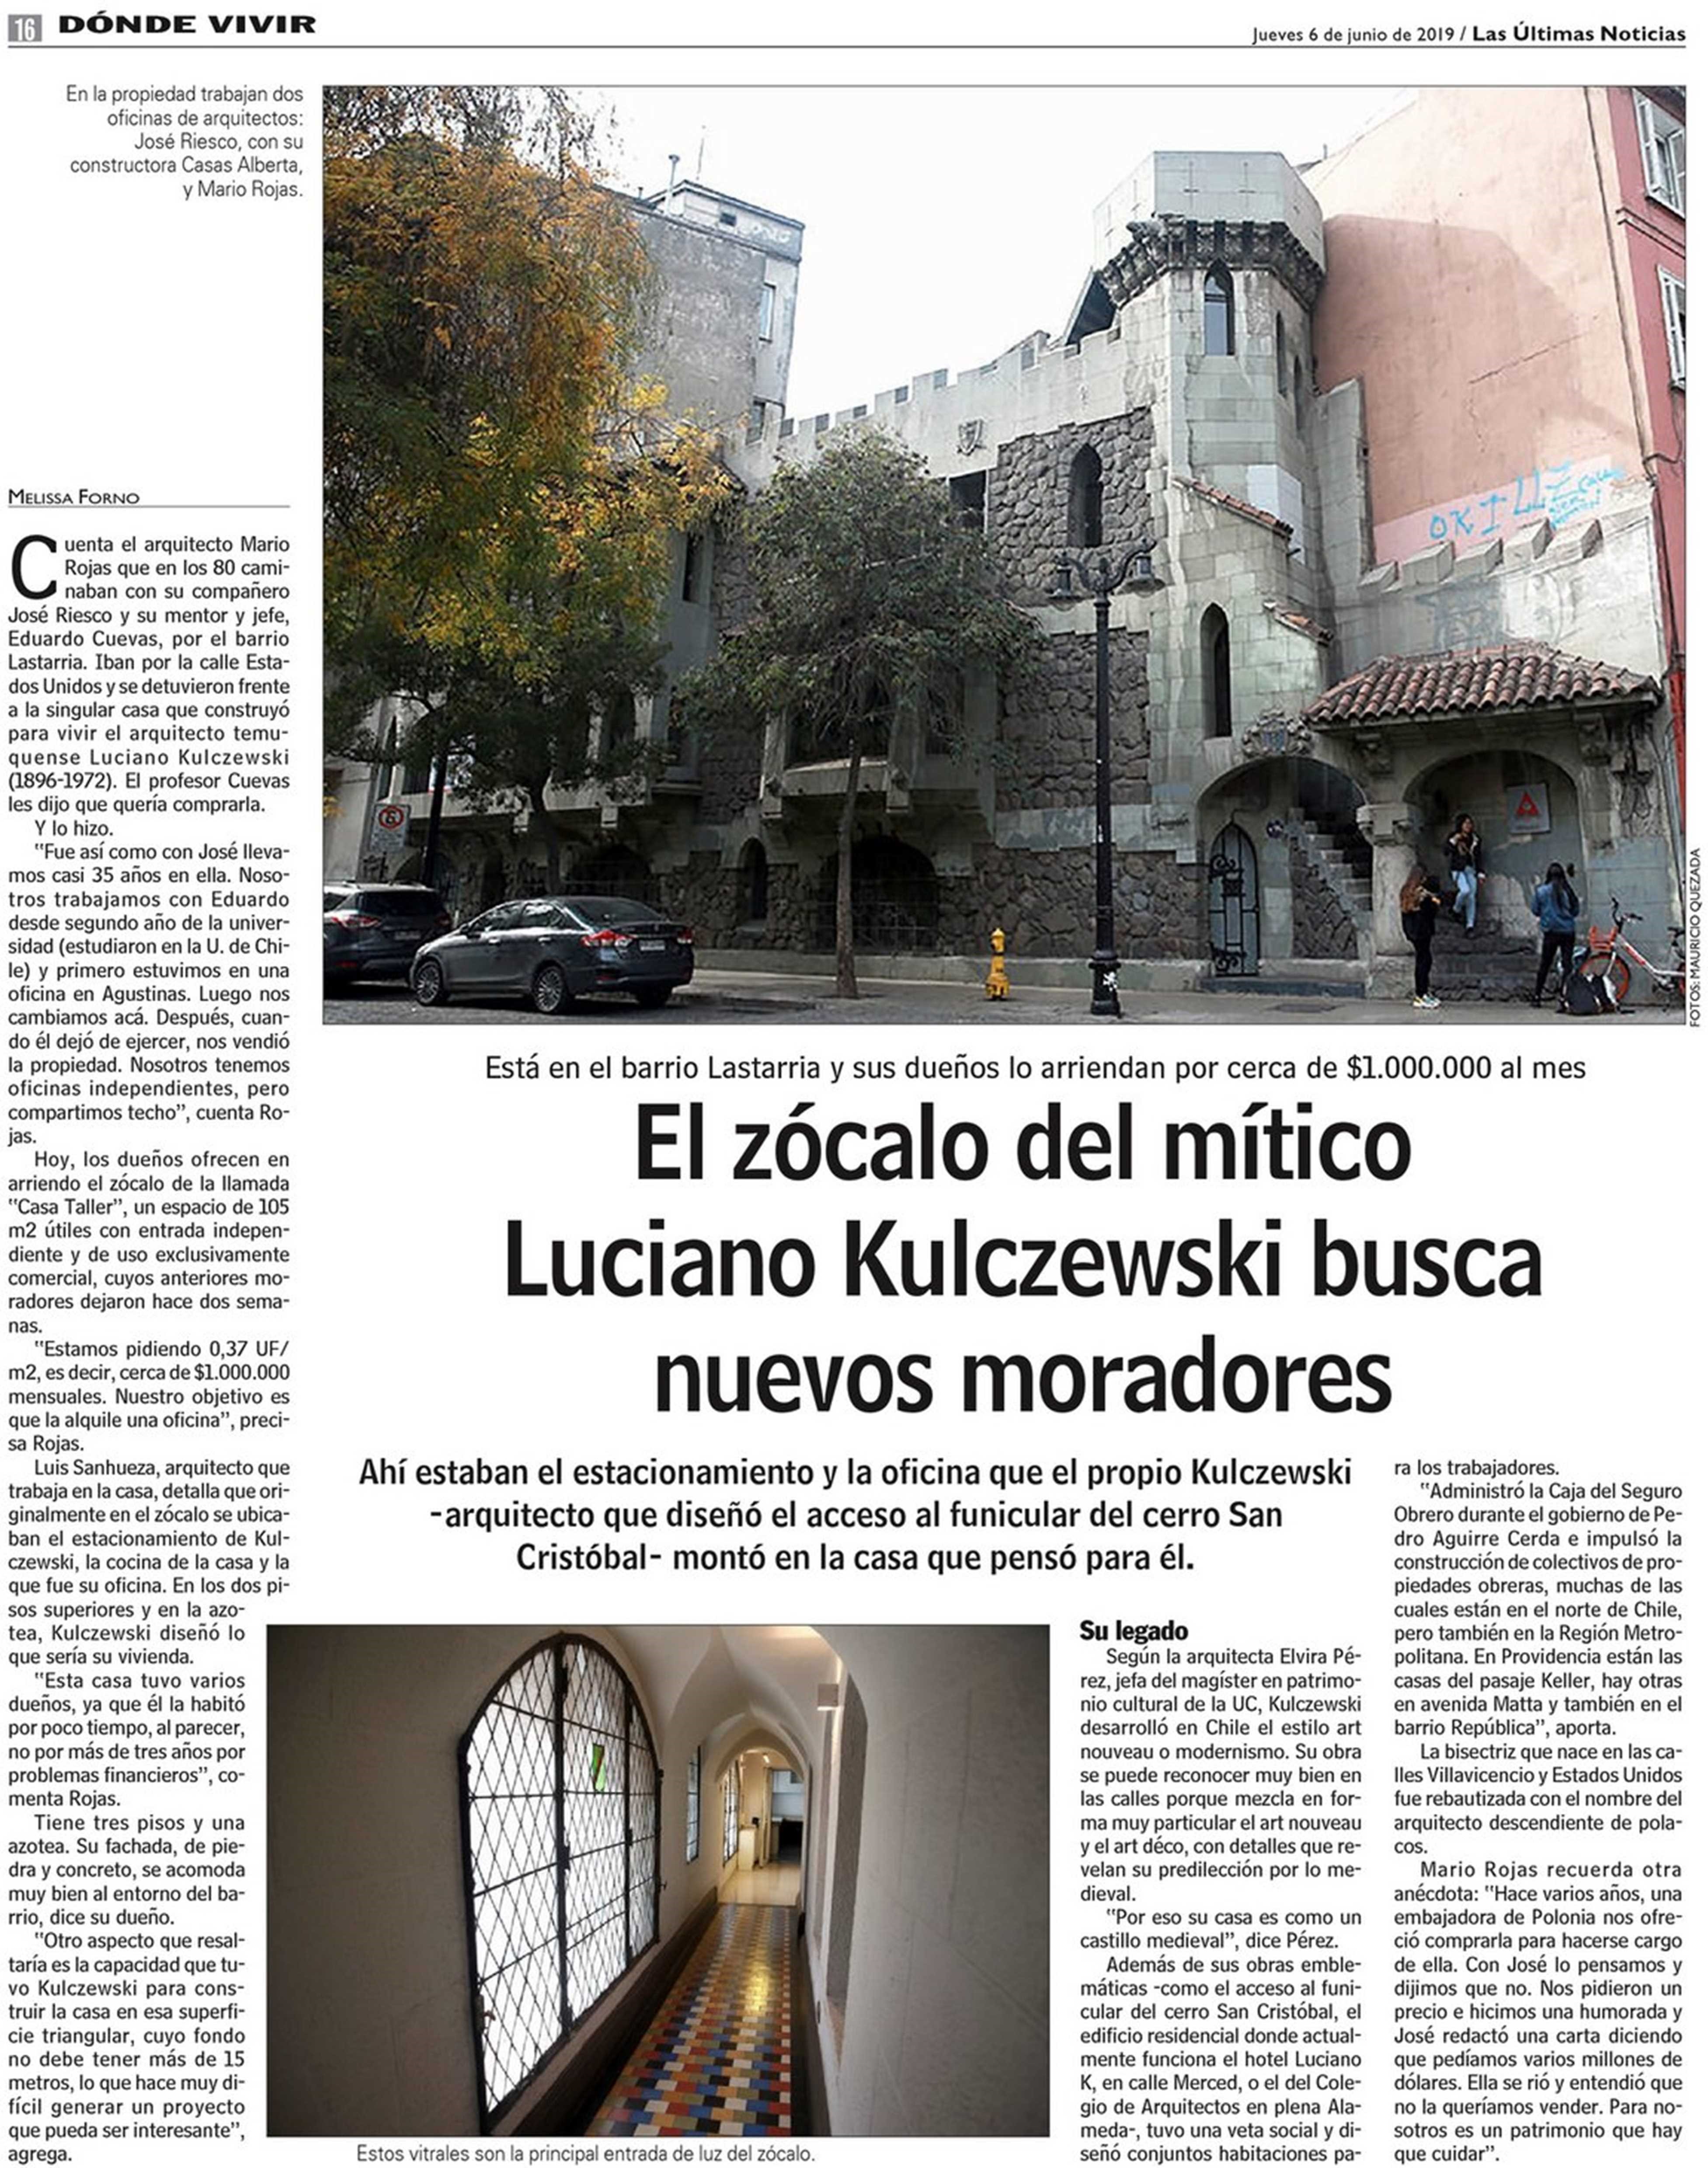 19-06-06Elvira_Perez_habla_sobre_la_Casa_Taller_del_arquitecto_Luciano_Kulczewski.jpeg